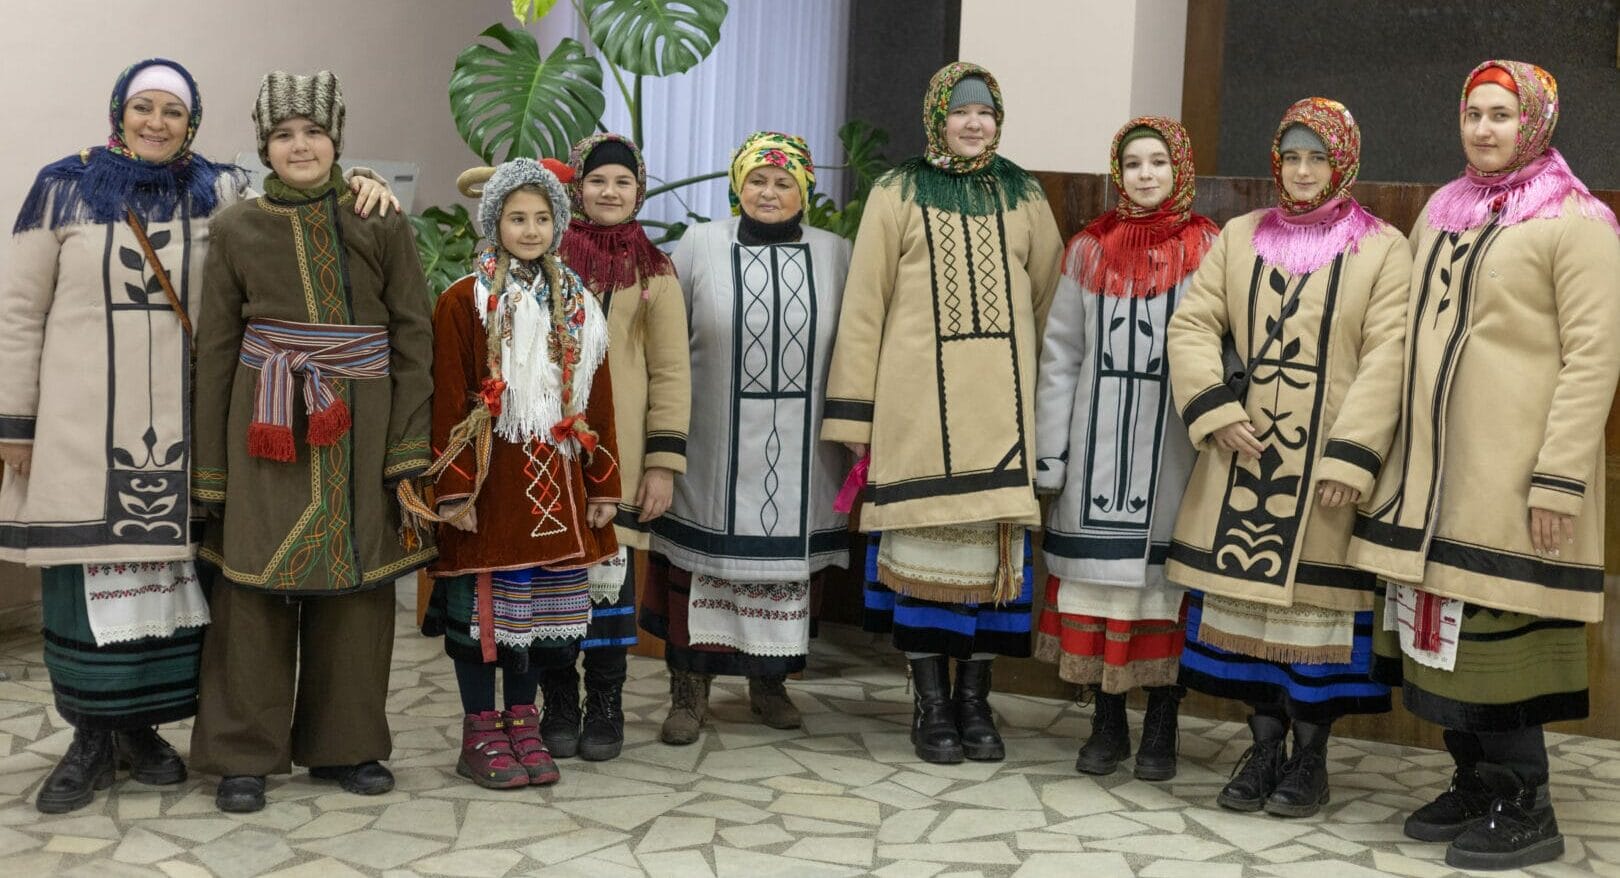 Verbychenka folklore and ethnographic team